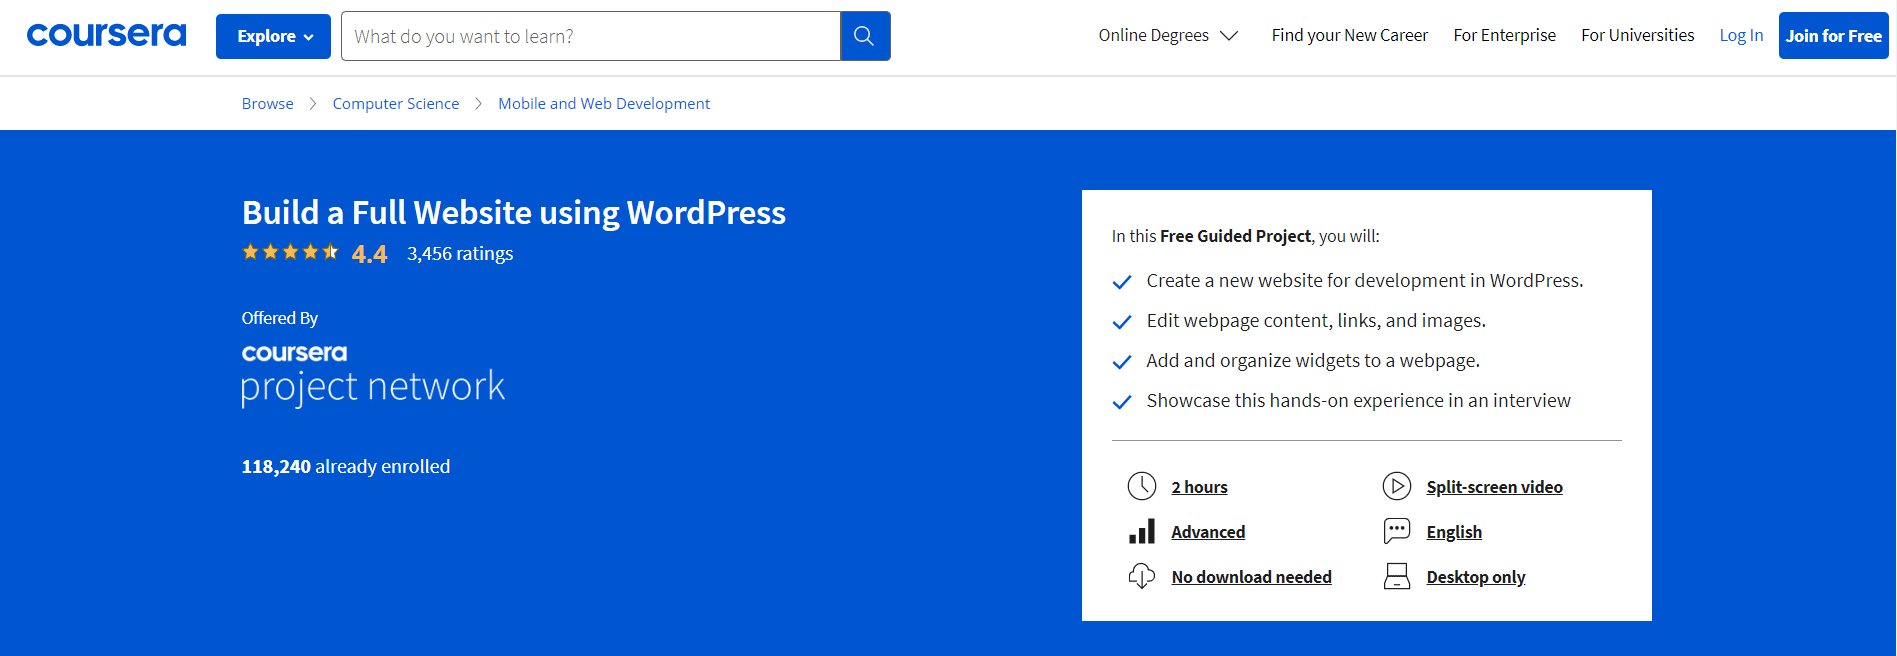 Build a Full Website Using WordPress